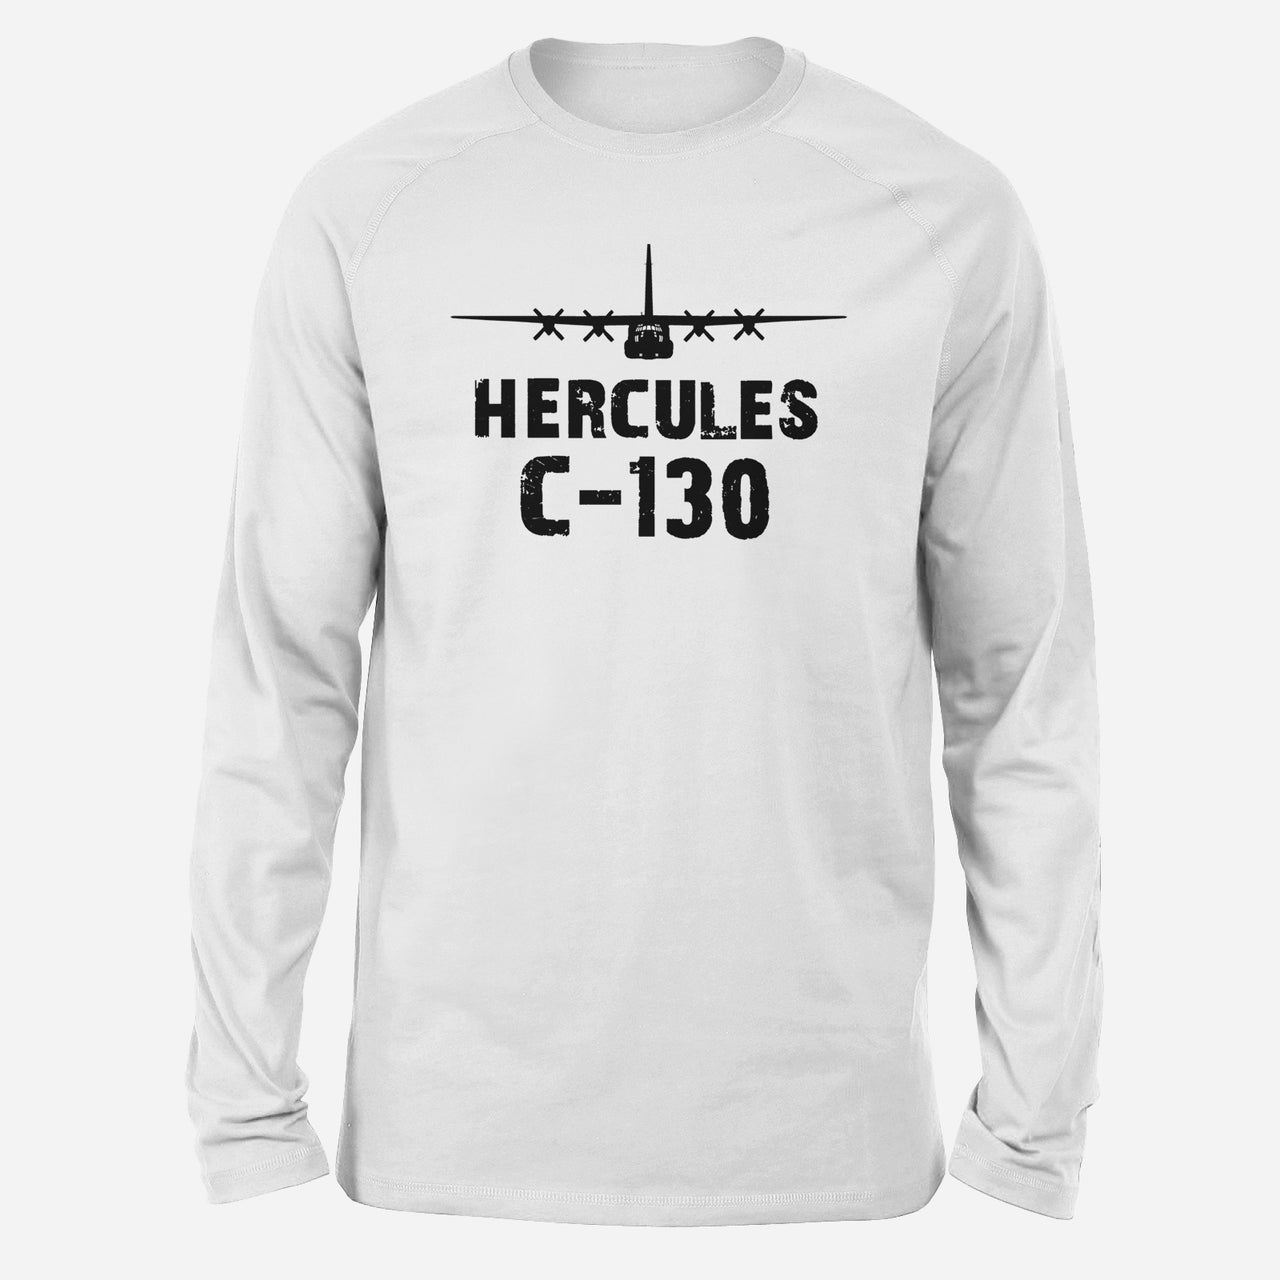 Hercules C-130 & Plane Designed Long-Sleeve T-Shirts